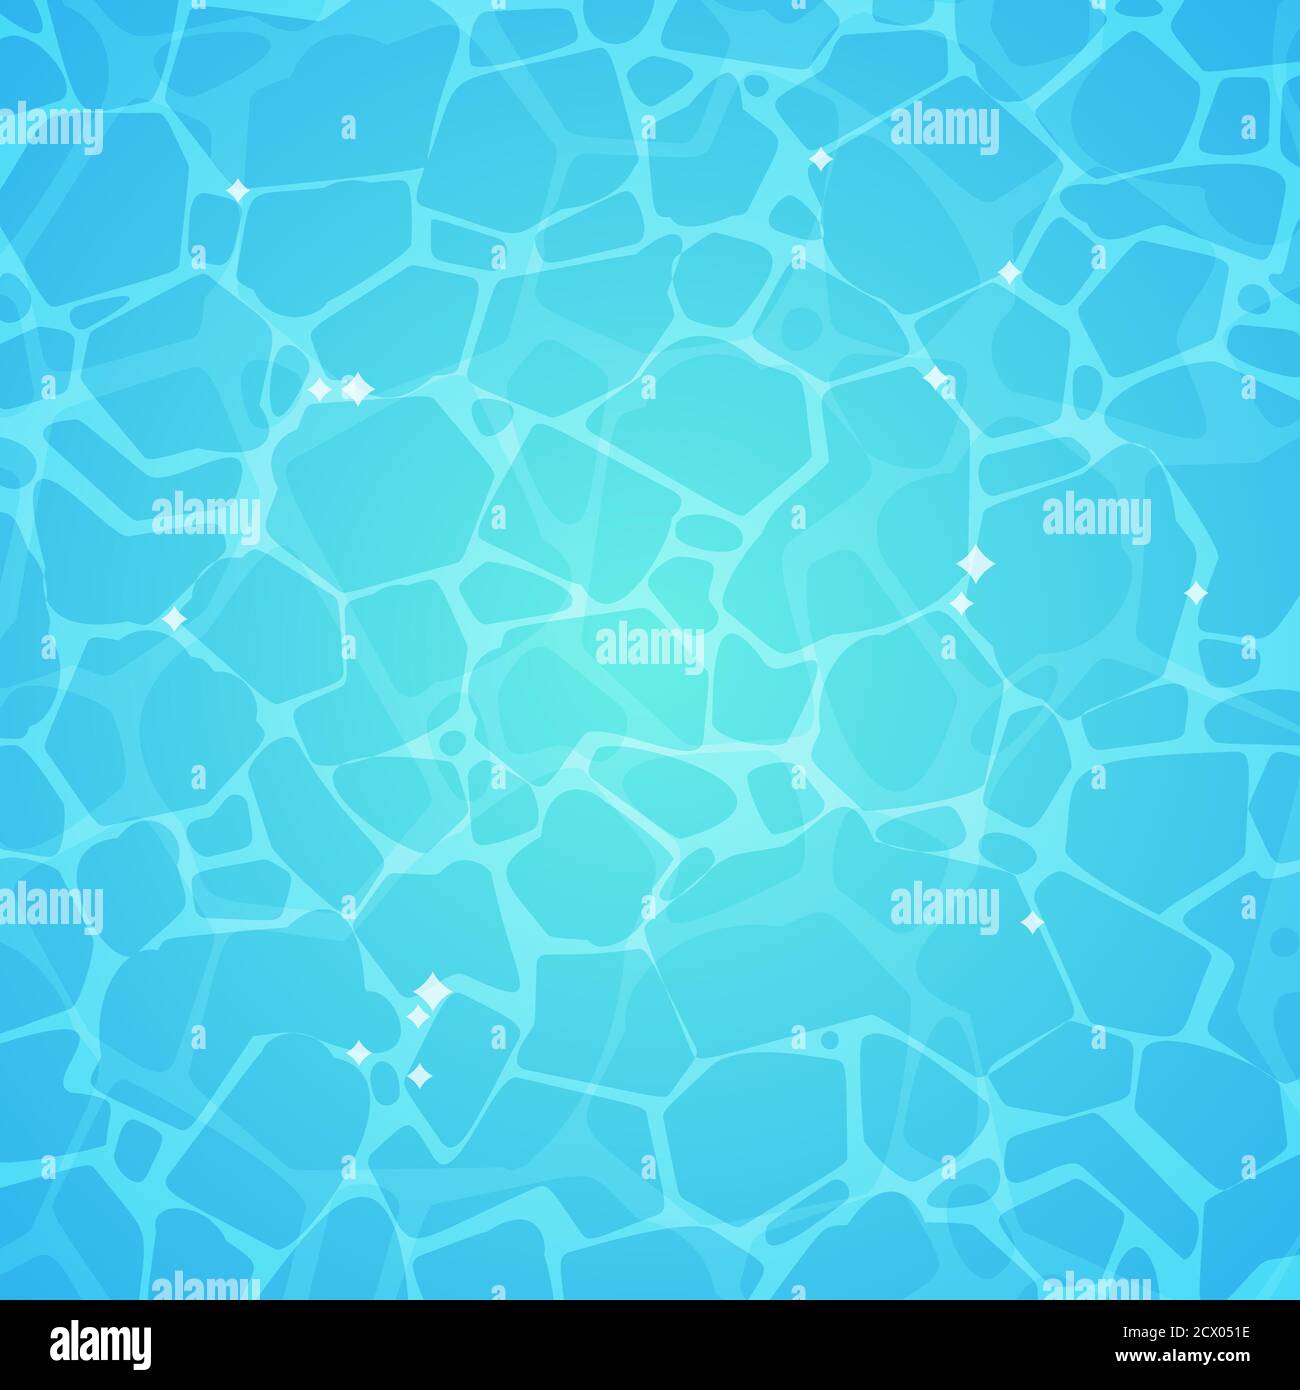 Blue water texture vector background. Swimming pool, sea, ocean closeup illustration. Stock Vector